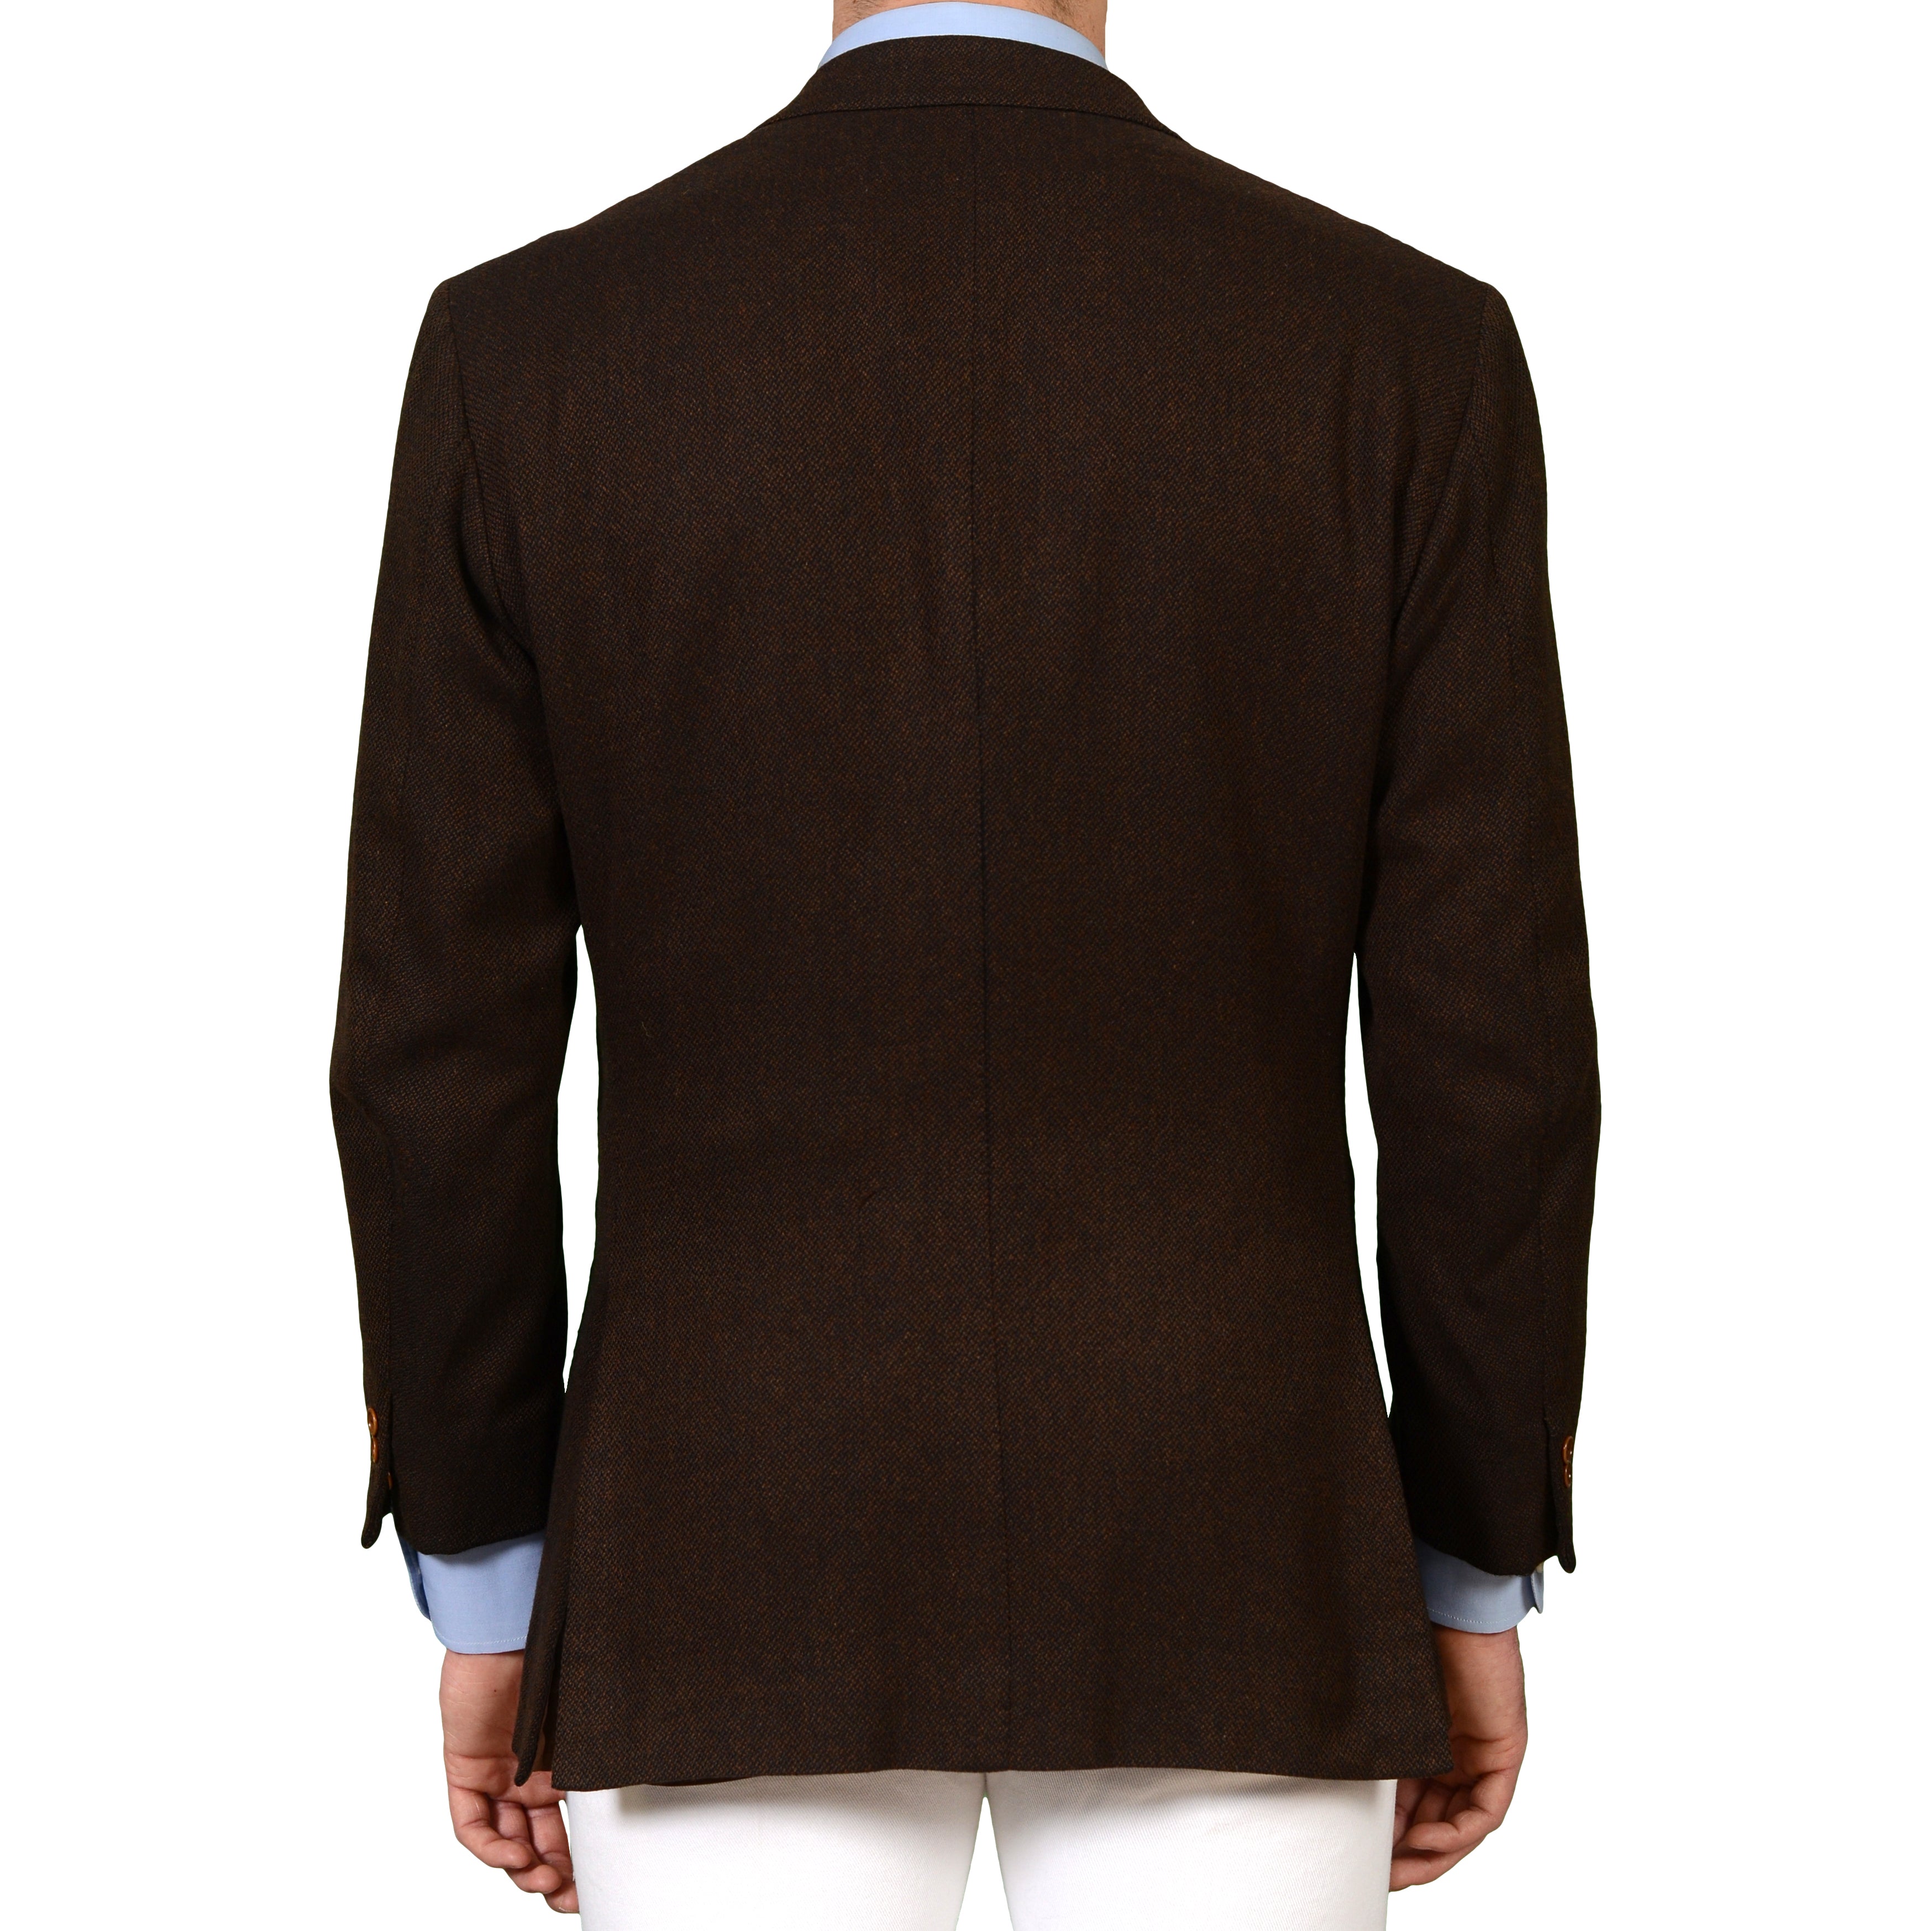 RUBINACCI LH Bespoke Brown Wool Cashmere Blazer Jacket EU 54 US 44 Athletic RUBINACCI